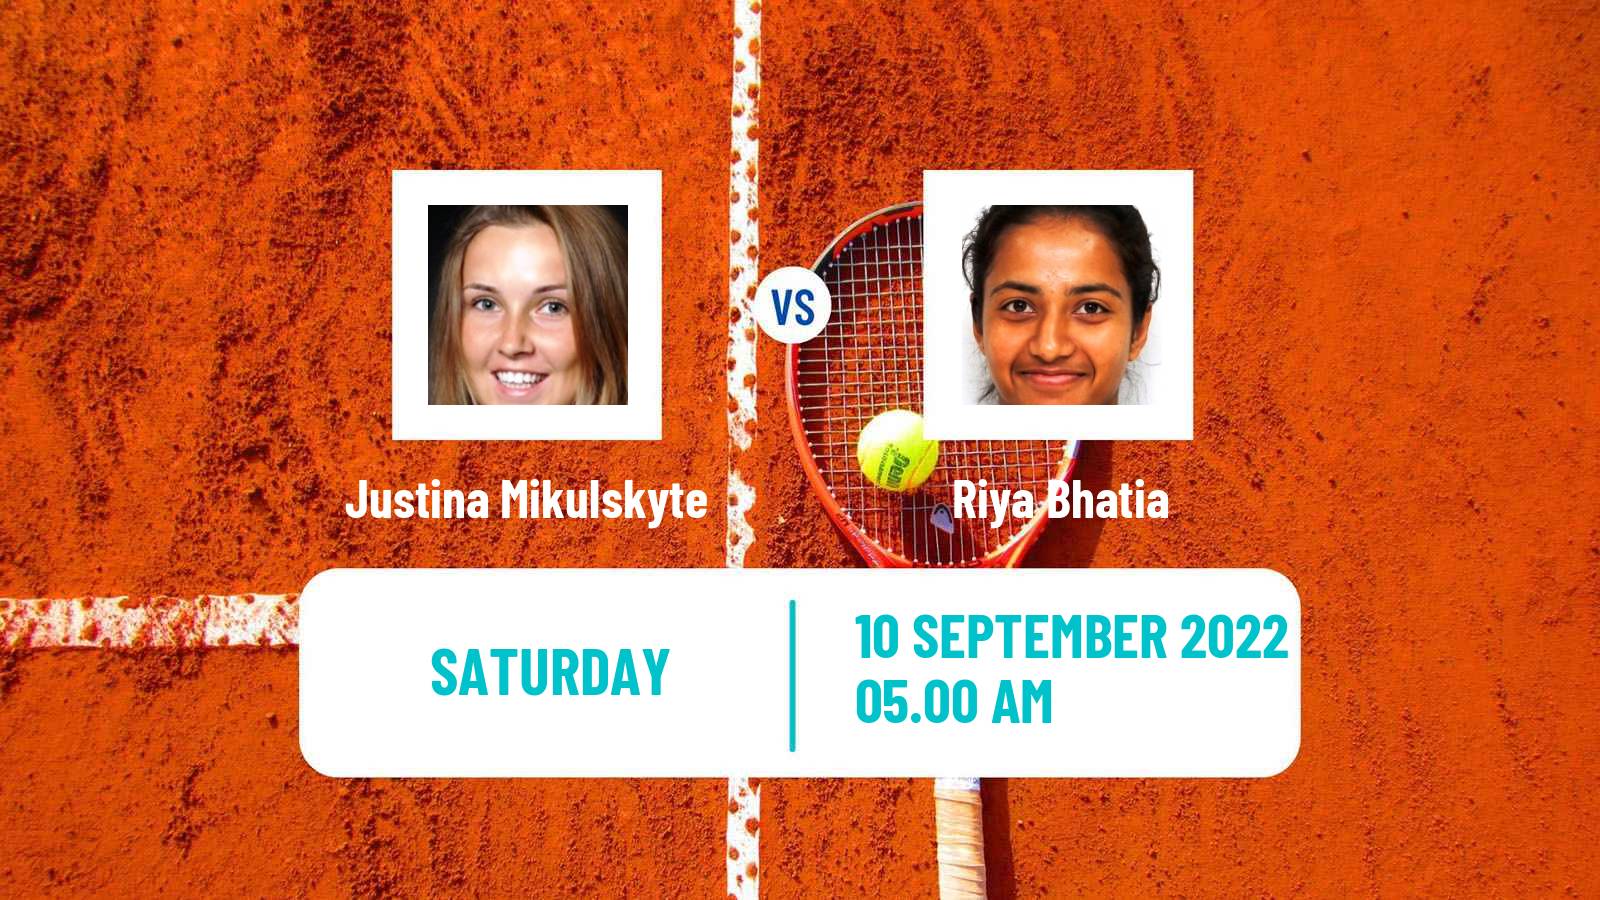 Tennis WTA Chennai Justina Mikulskyte - Riya Bhatia